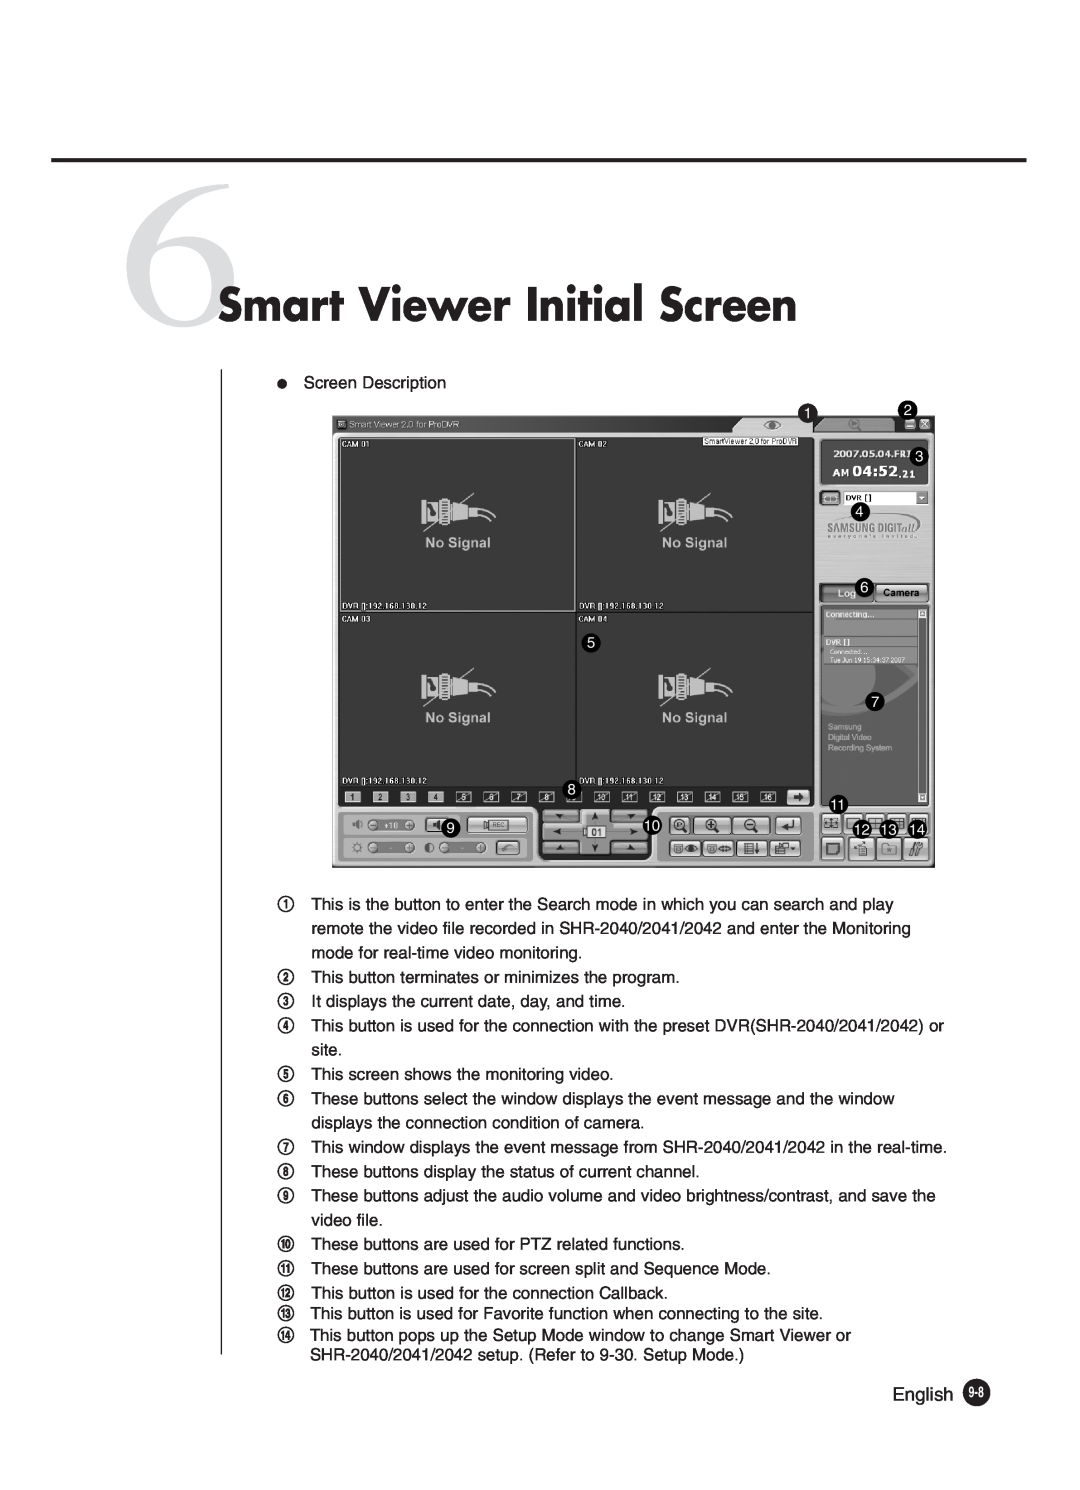 Samsung SHR-2040P250, SHR-2042P250 manual 6Smart Viewer Initial Screen 